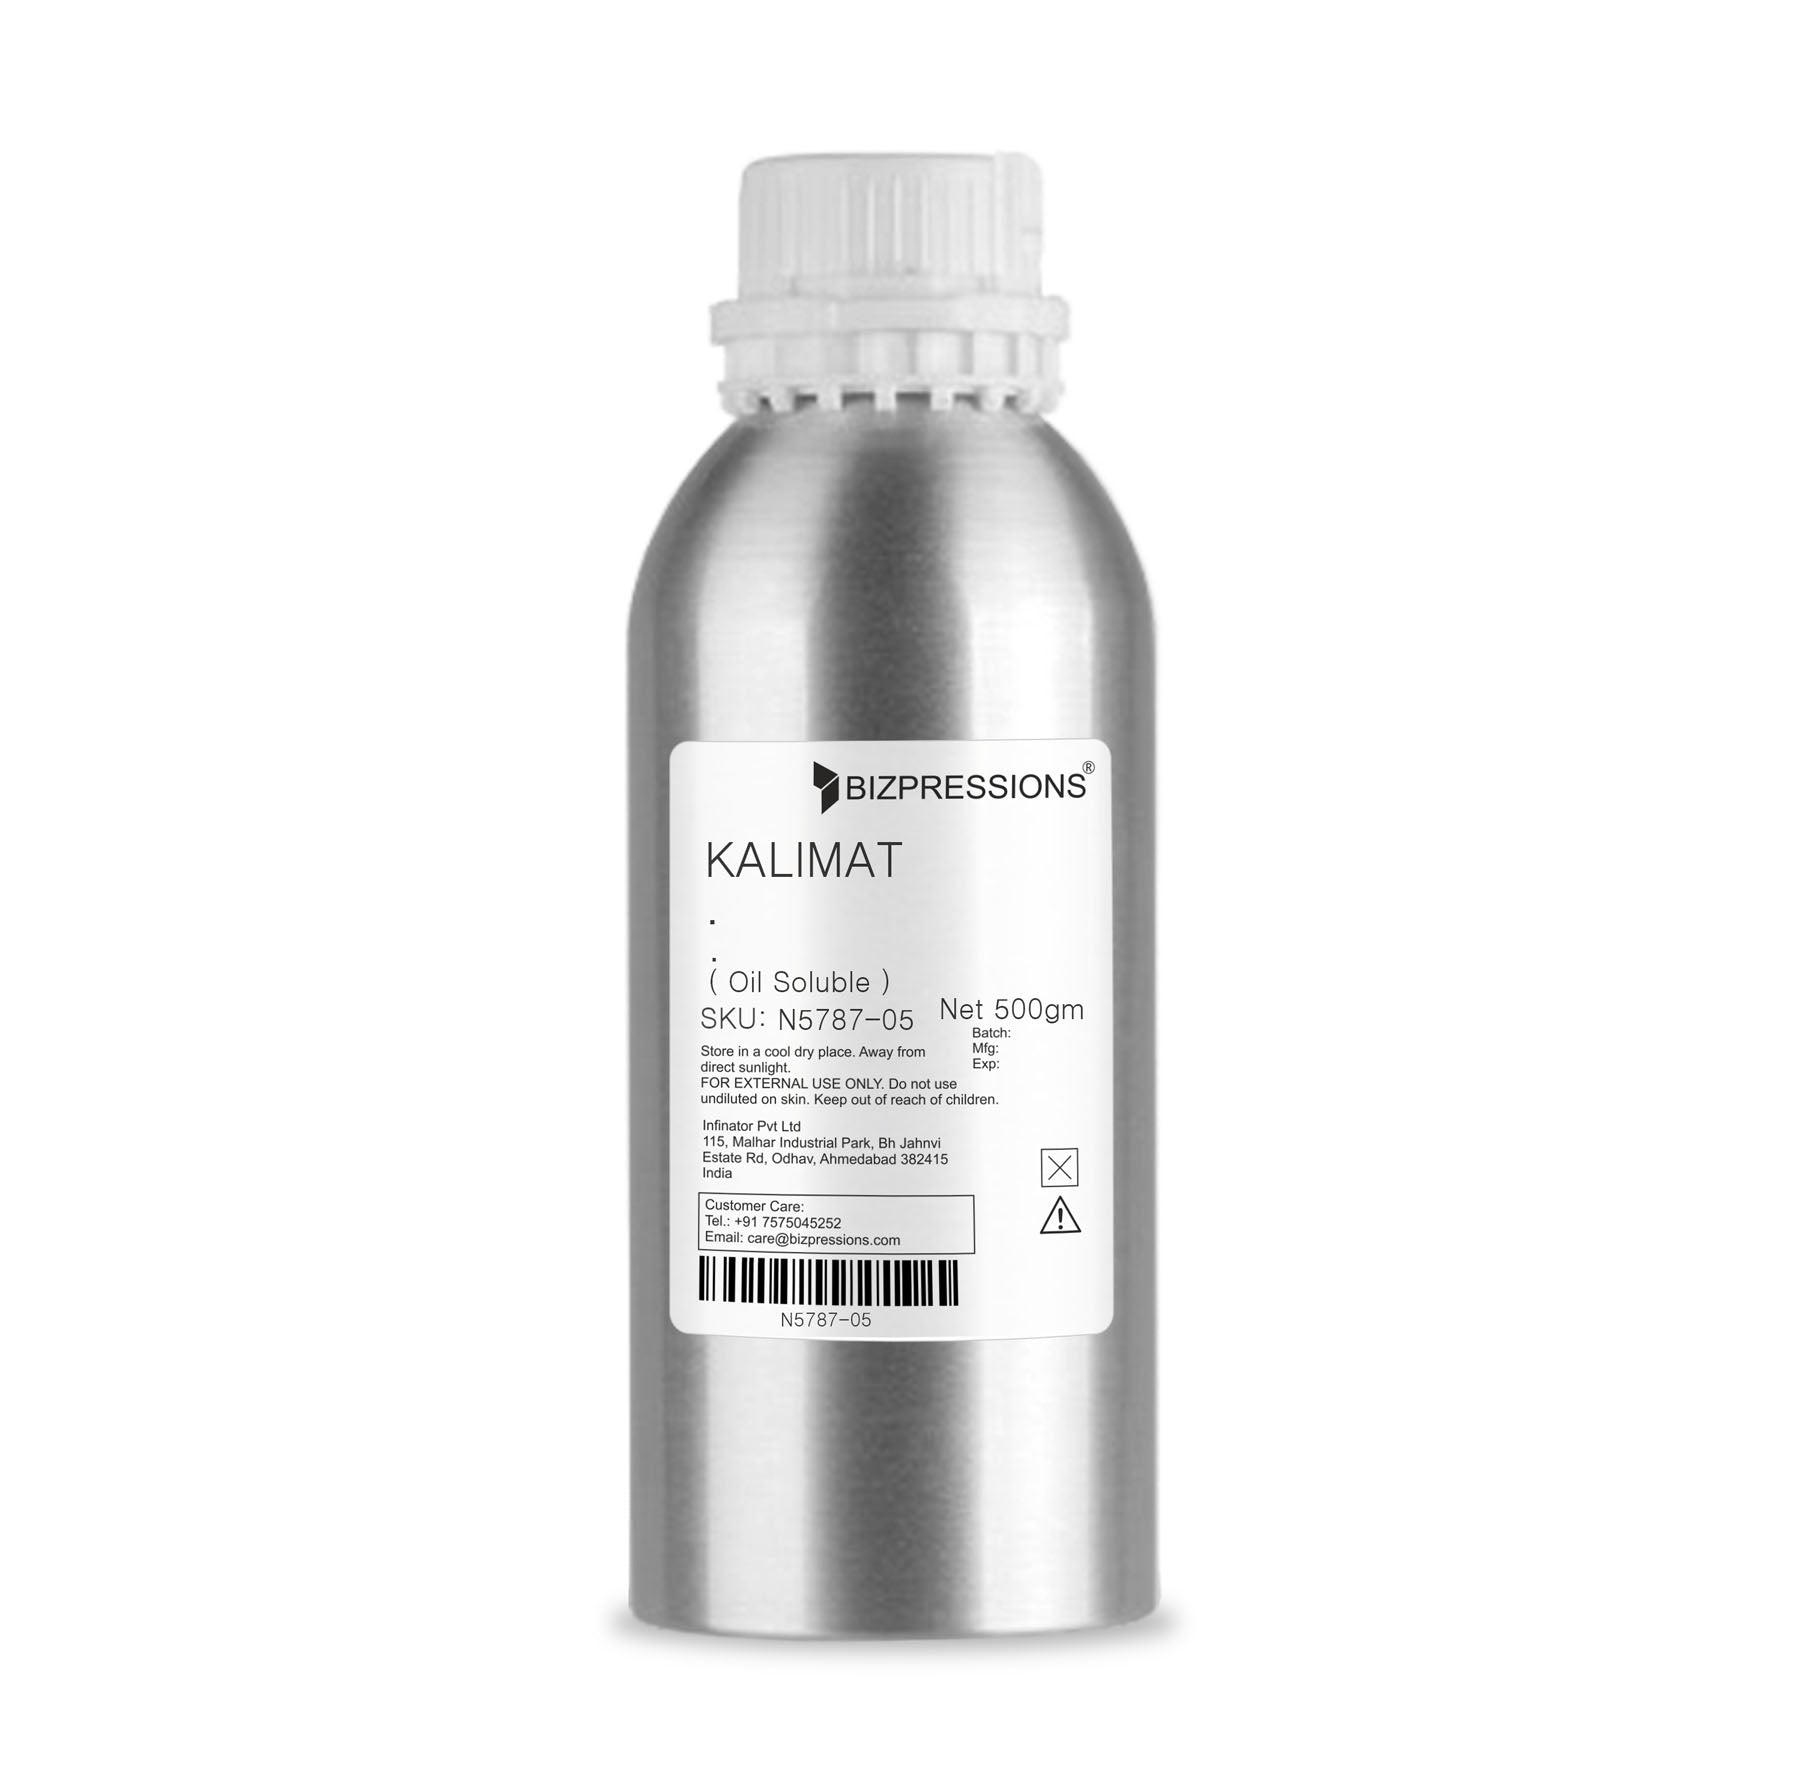 KALIMAT - Fragrance ( Oil Soluble ) - 500 gm